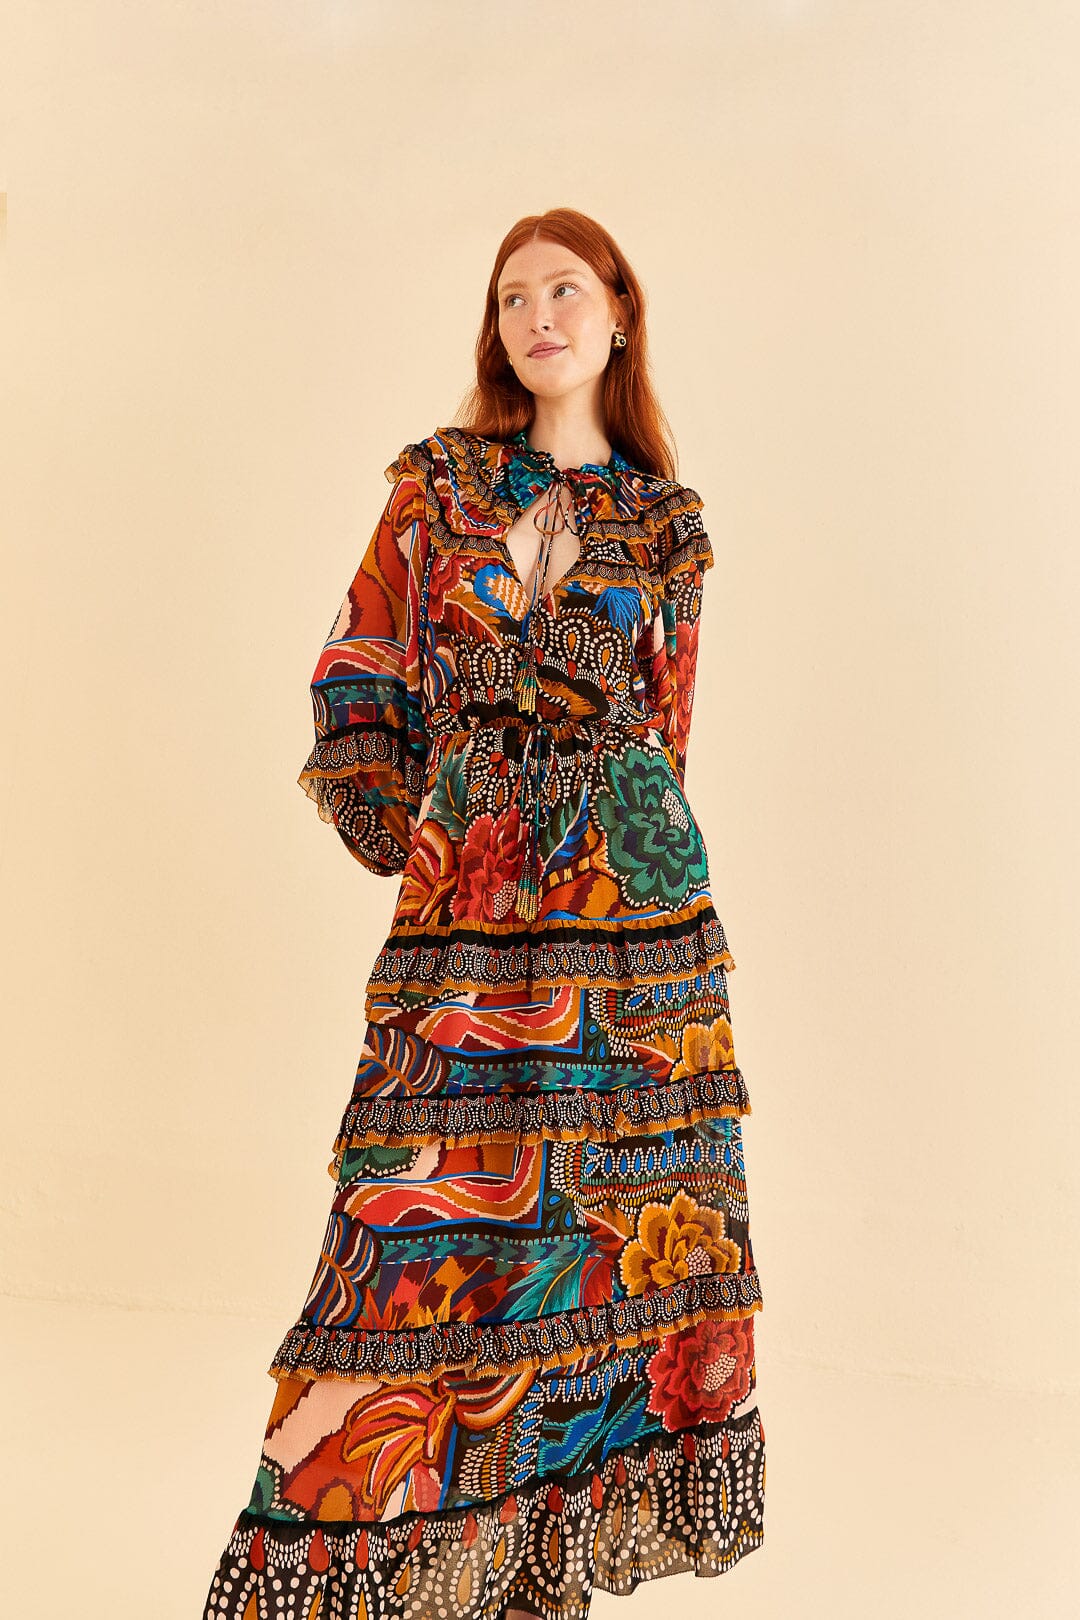 multicolor dress